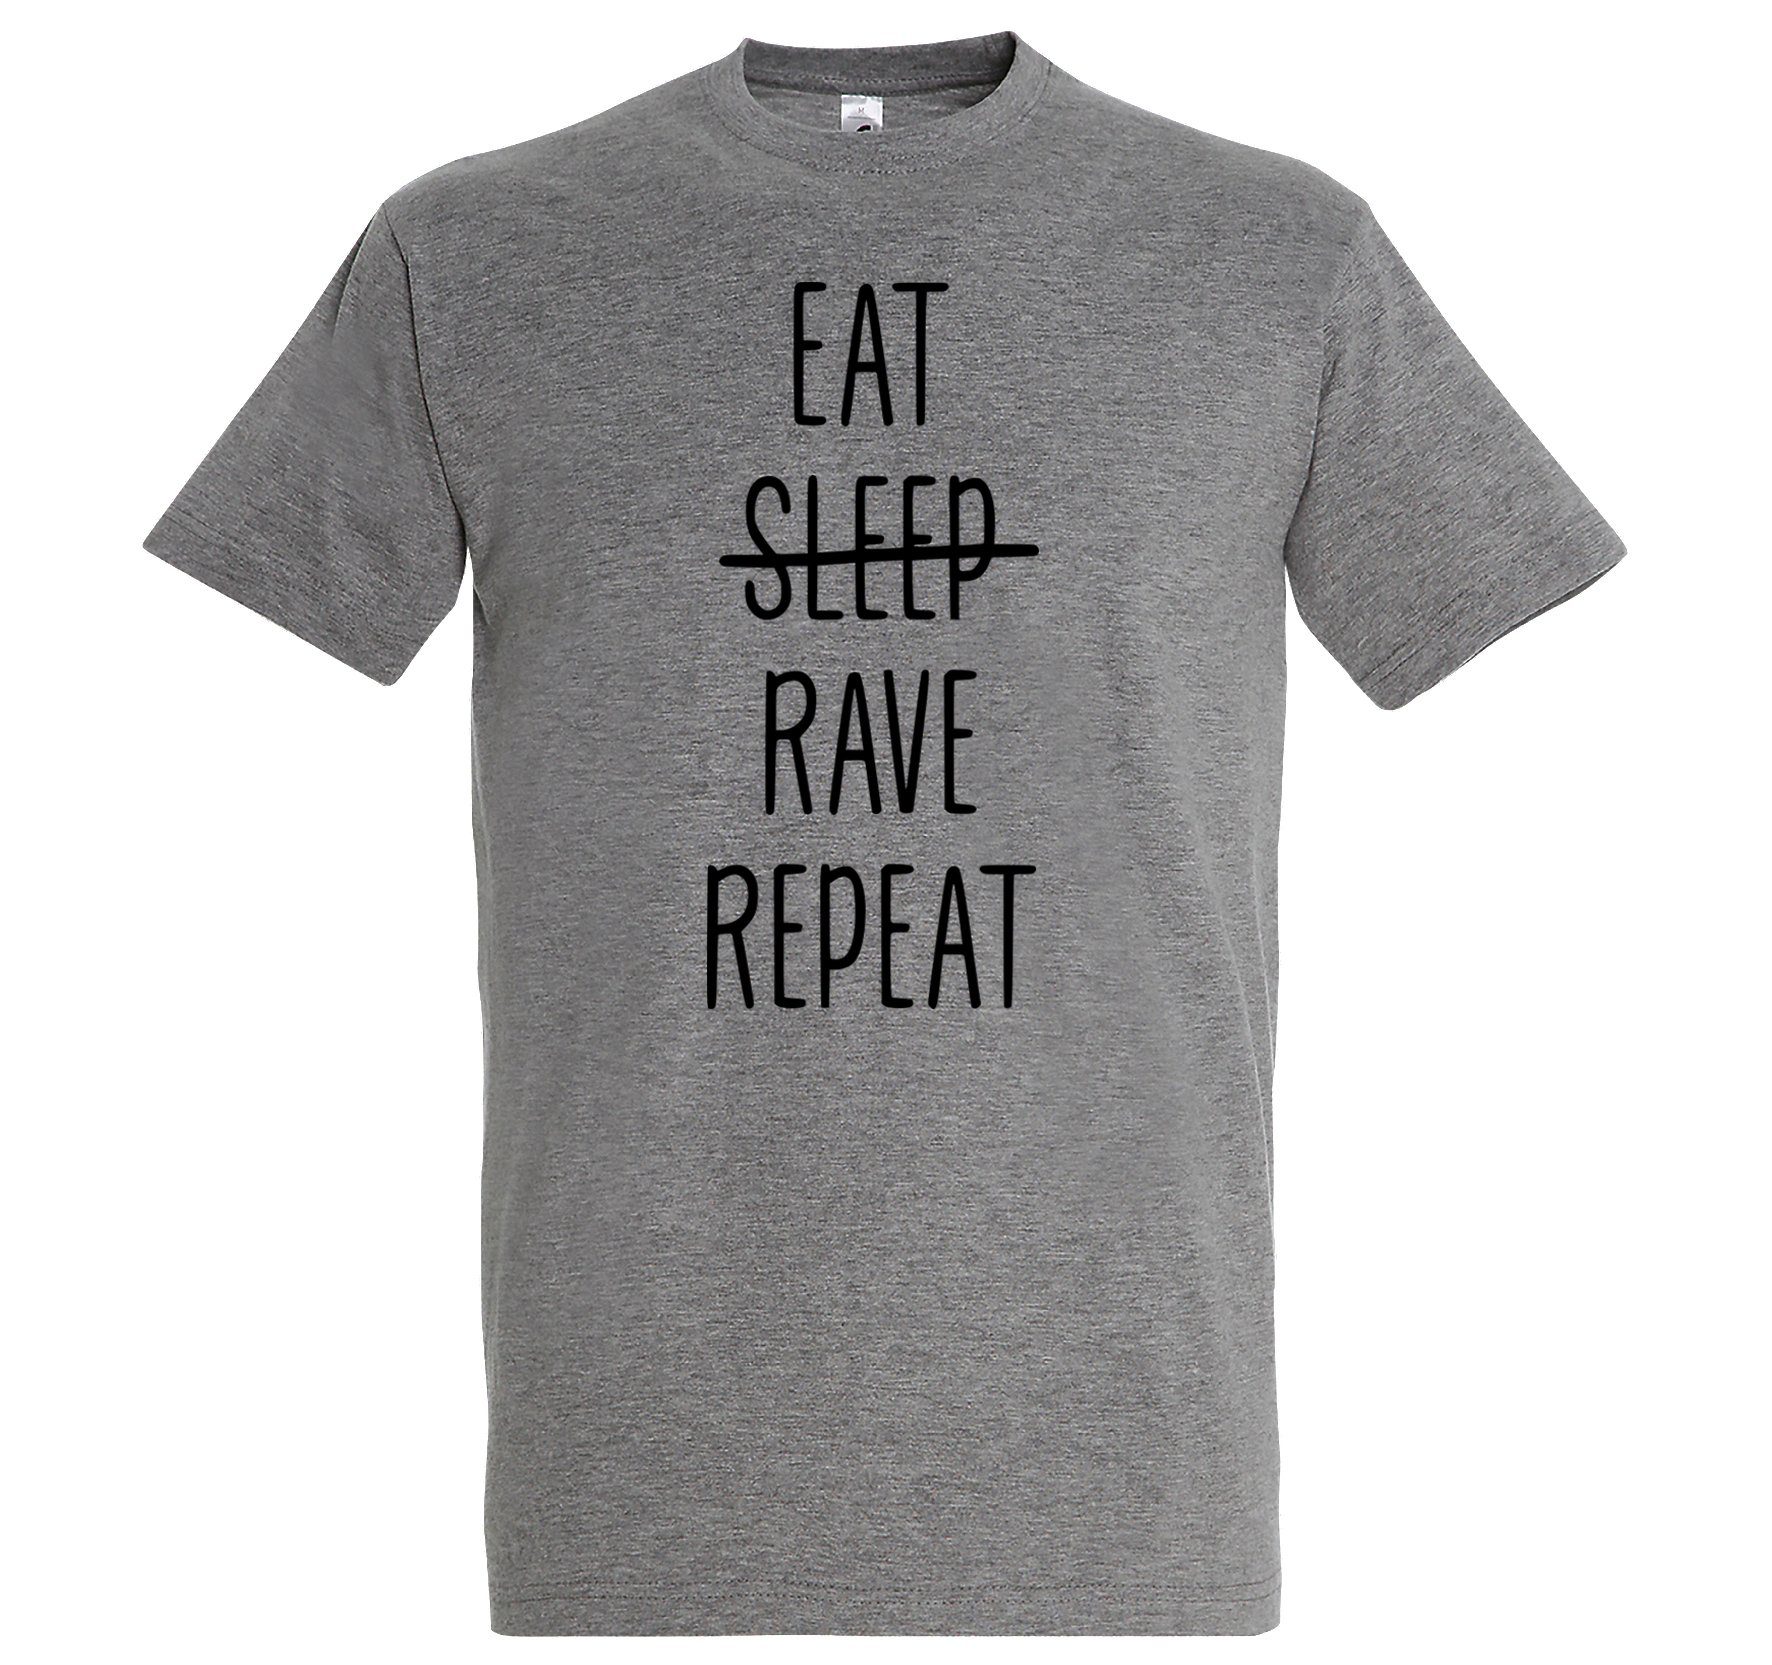 Rave trendigem Designz Youth T-Shirt T-Shirt Grau mit Herren Eat Frontprint Repeat